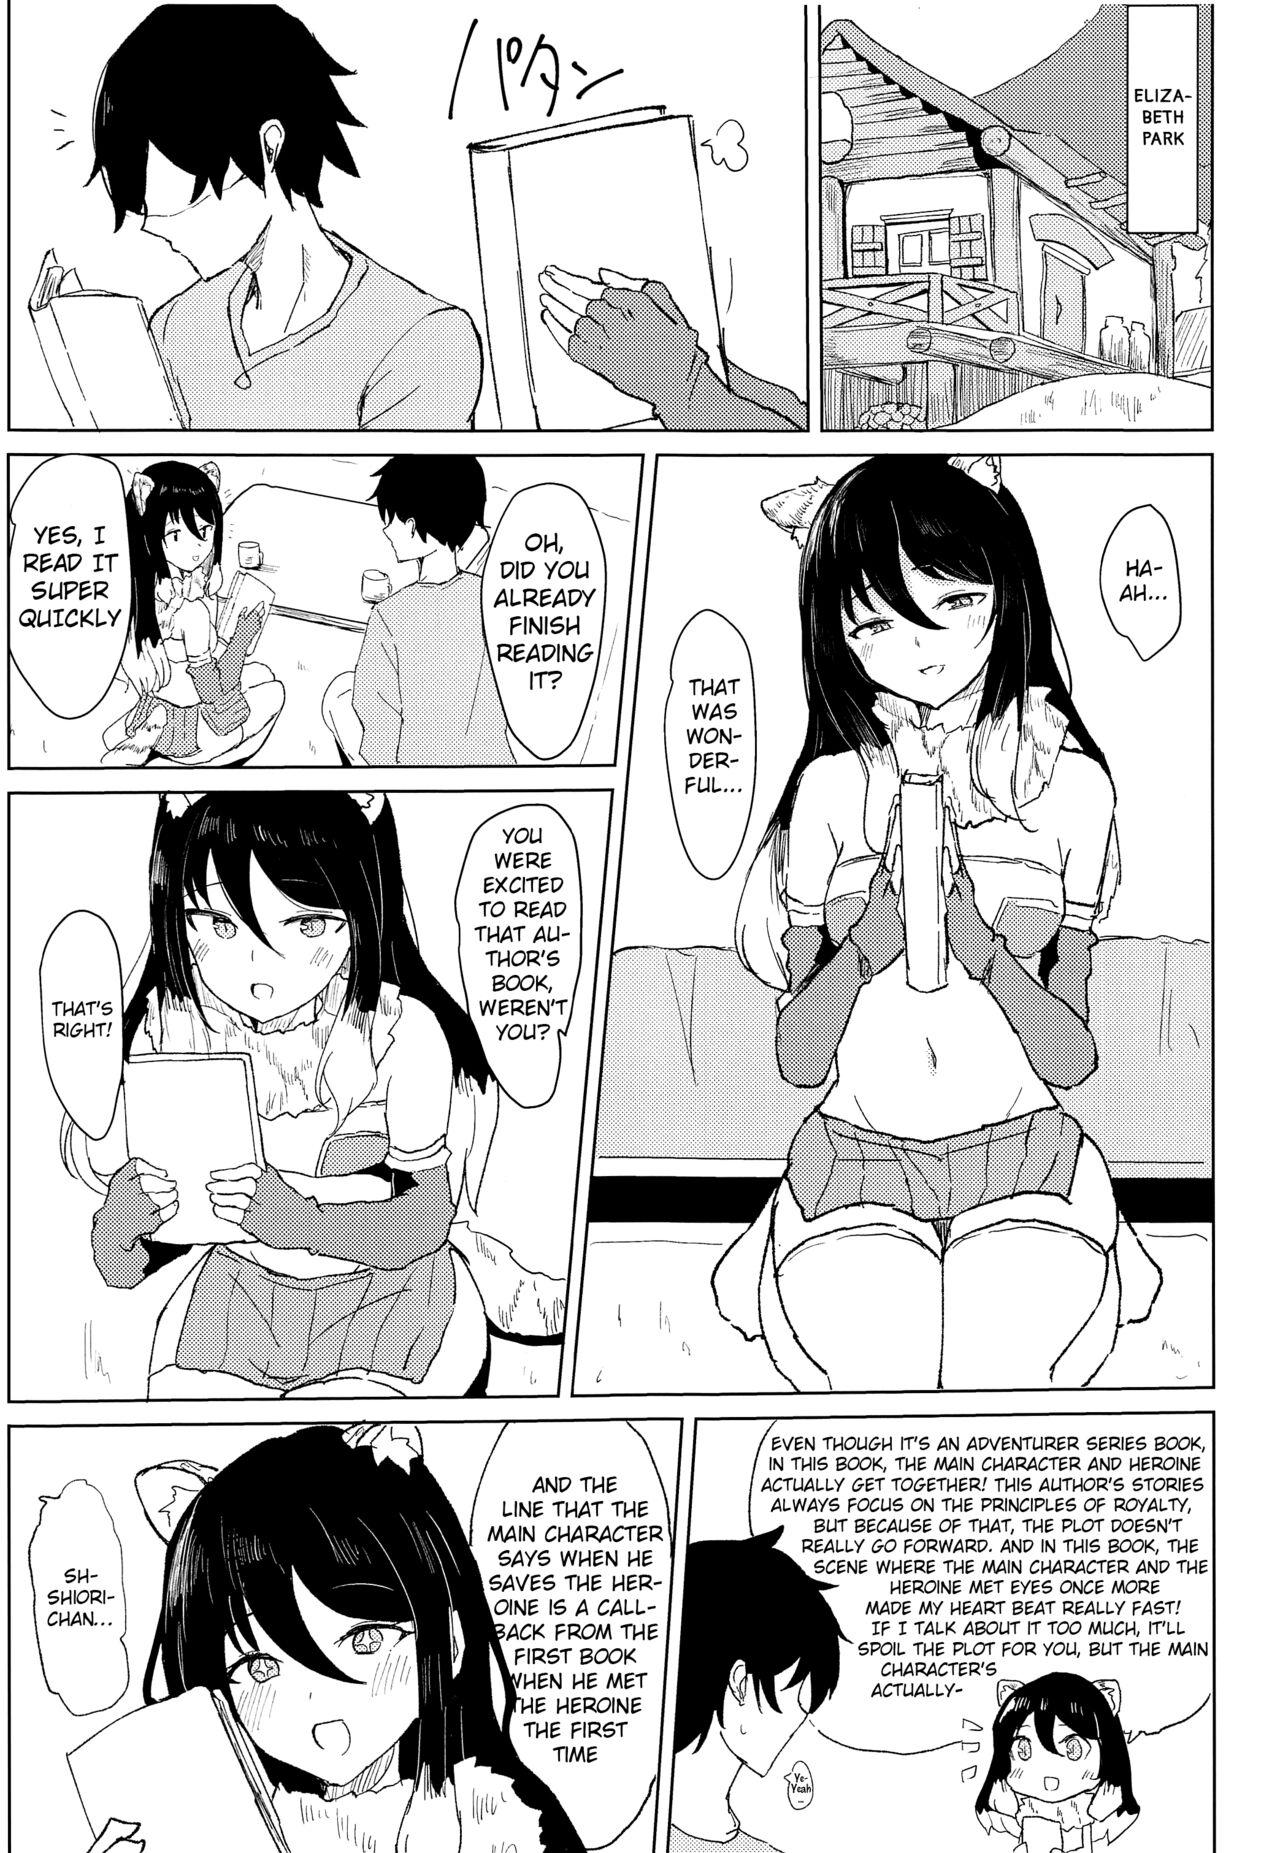 Athletic Hon ni Shiori o Hasandara | Putting Shiori in between a book - Princess connect Sapphic Erotica - Page 2